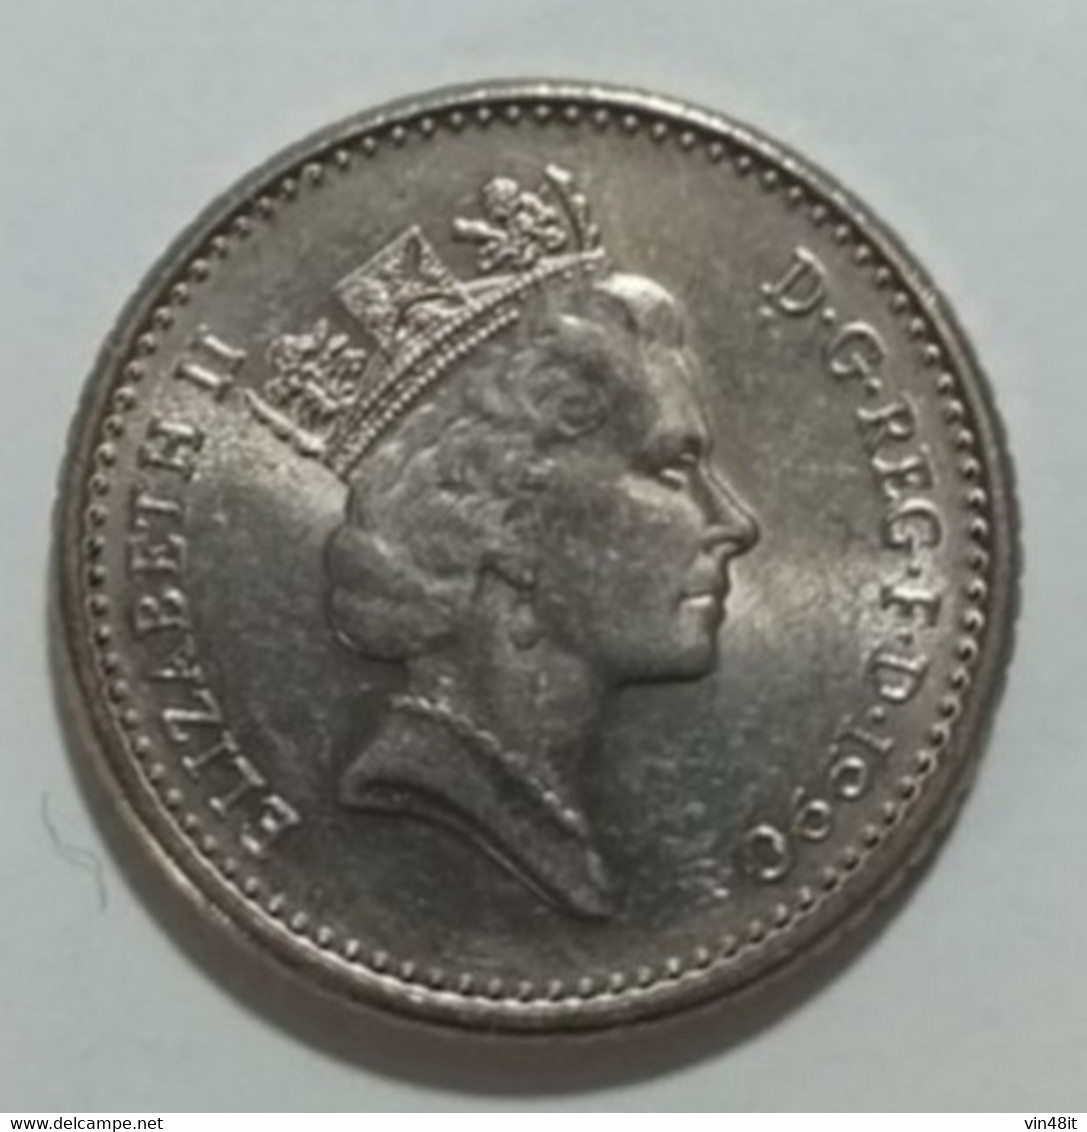 1990  - GRAN BRETAGNA  -  MONETA DEL VALORE DI 5 PENCE  -   USATA   - - 5 Pence & 5 New Pence